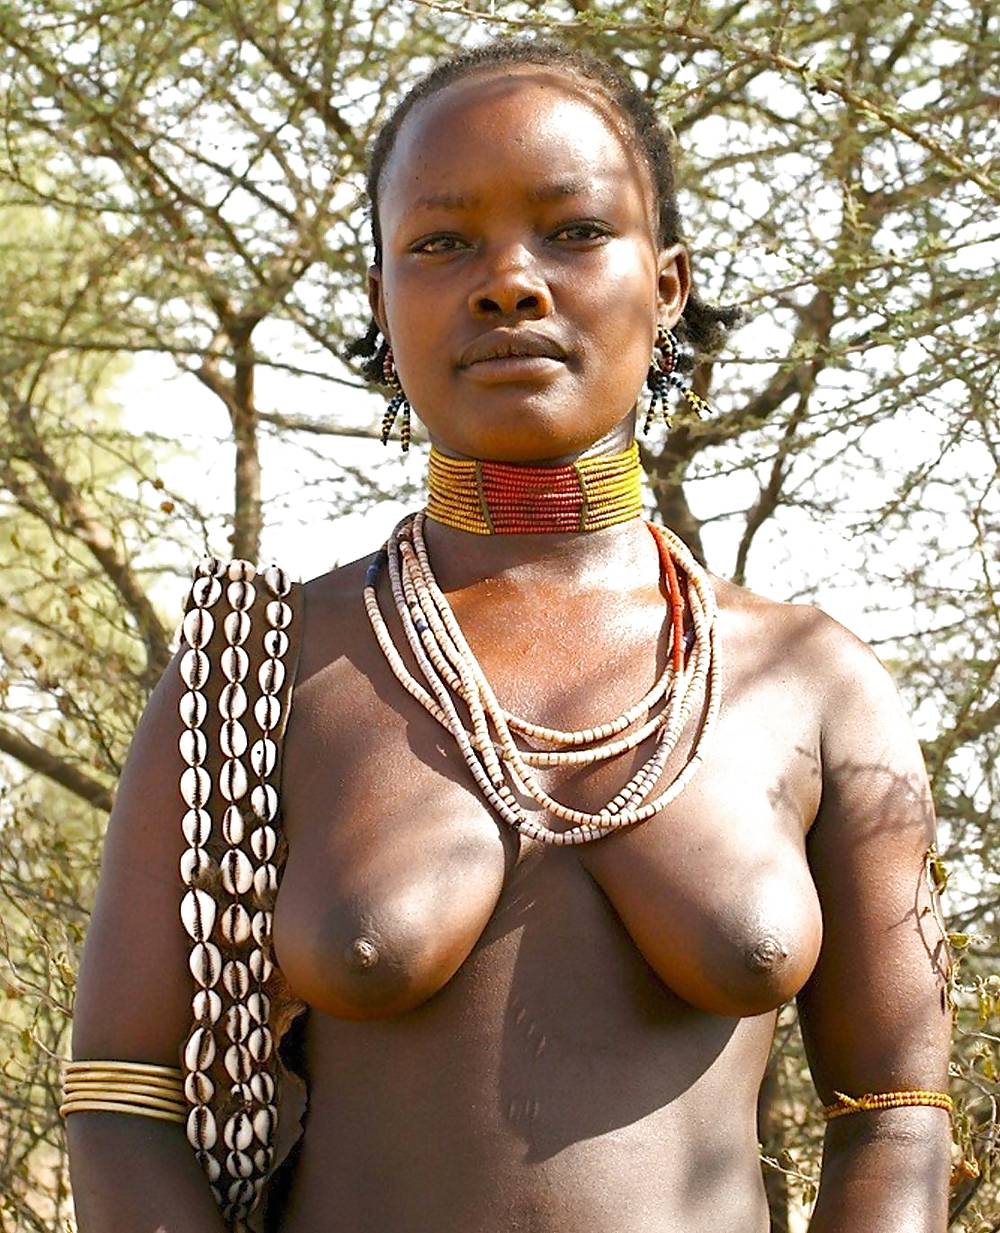 Jungle girls from Kenia #15313589